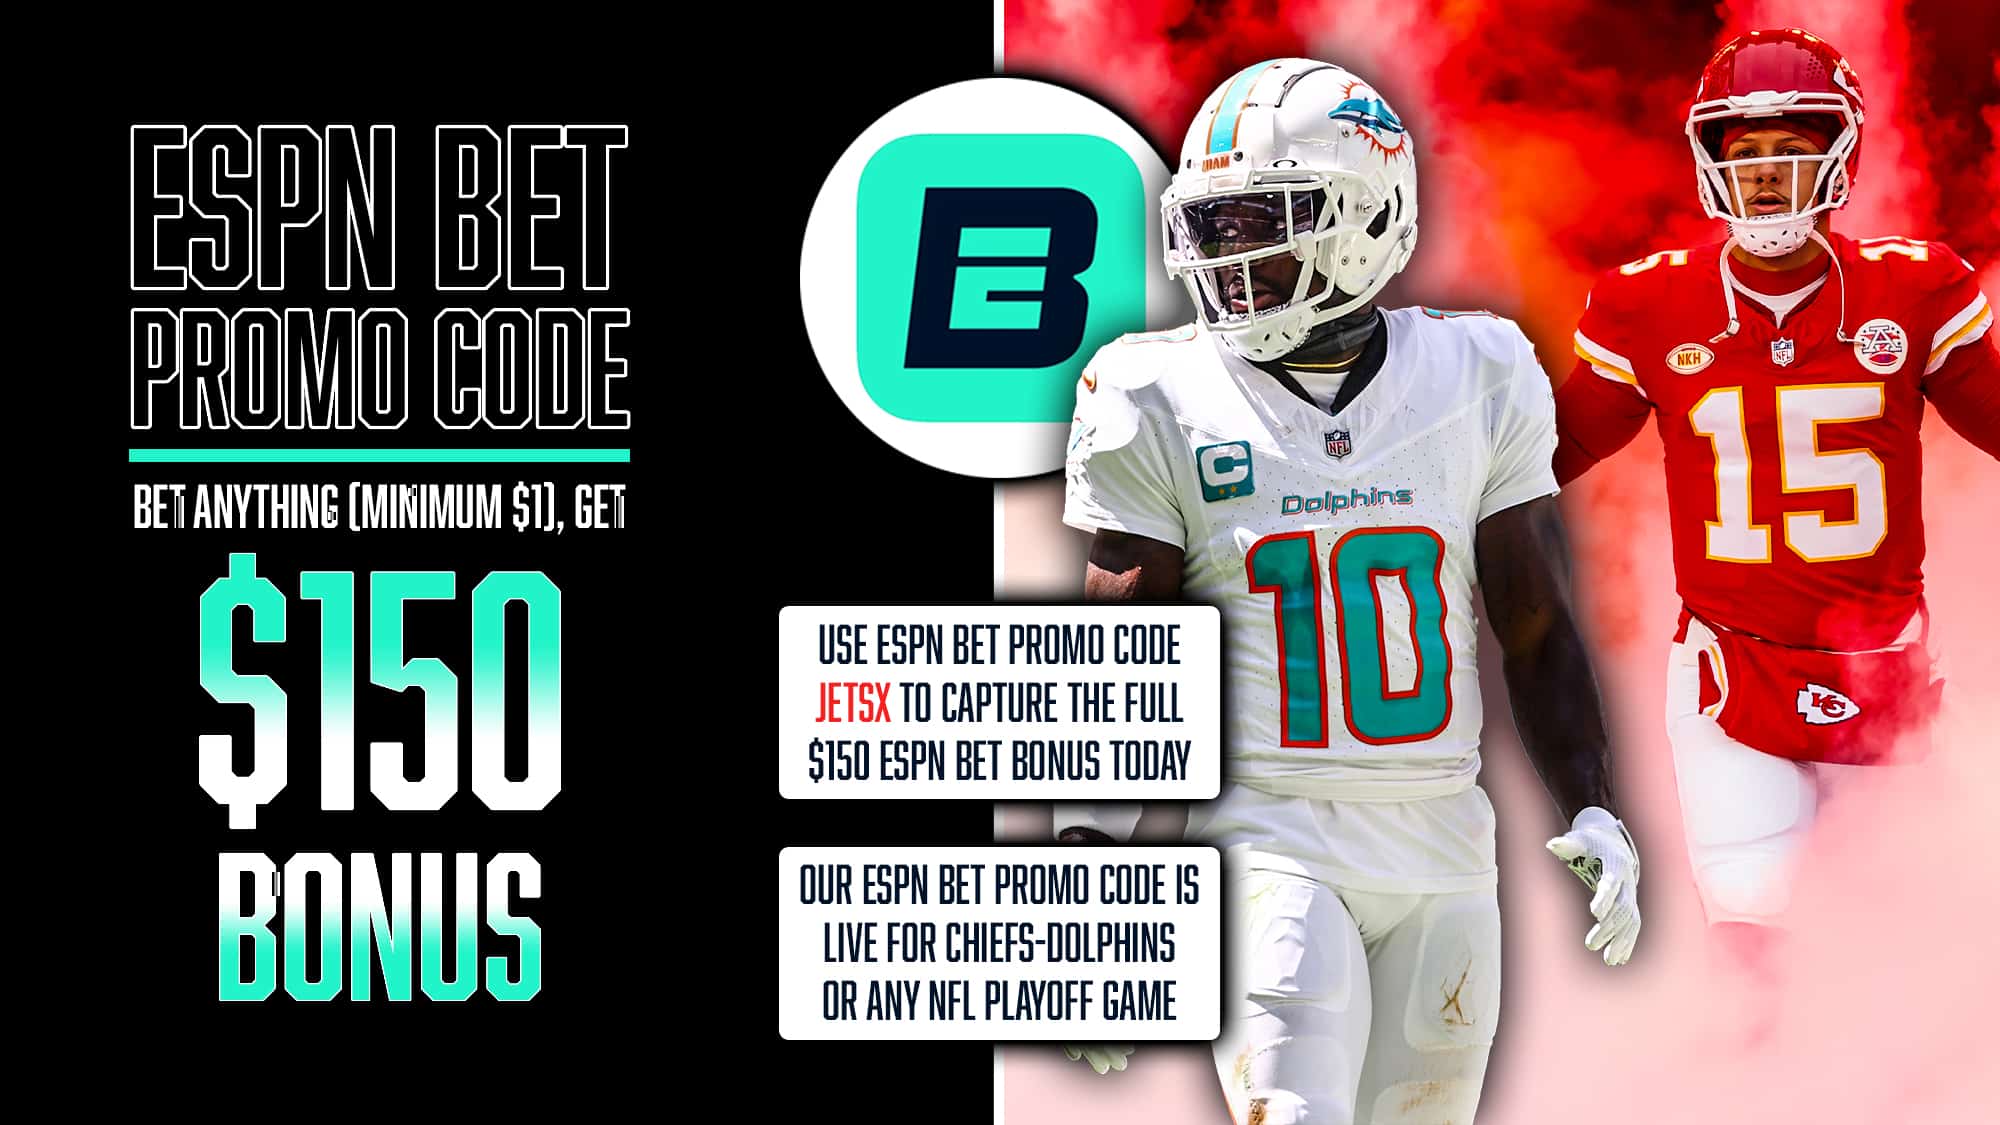 ESPN Bet Promo Code, JETSX, $150 Bonus, Kansas City Chiefs vs. Miami Dolphins, NFL Playoffs